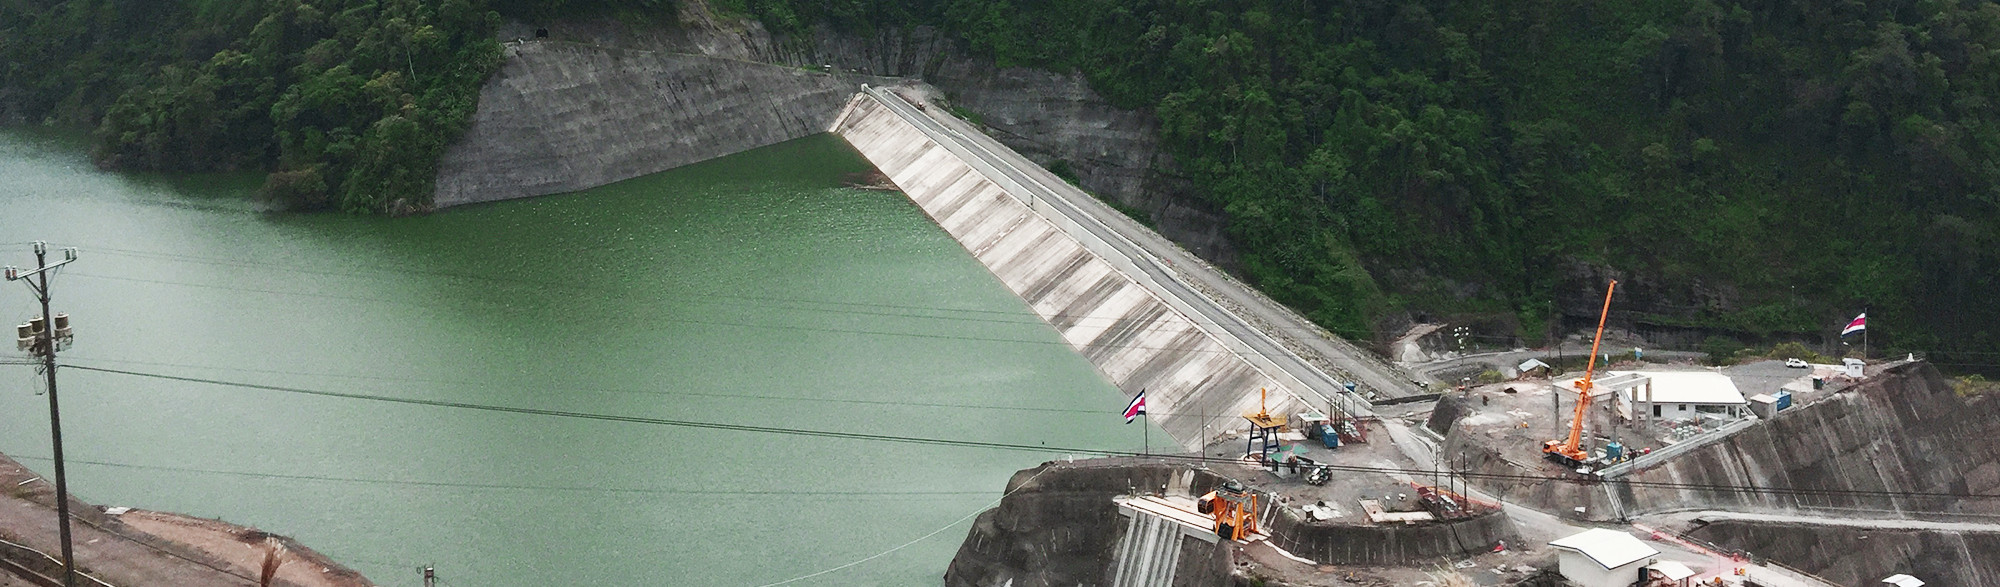 Reventazón Hydroelectric Dam